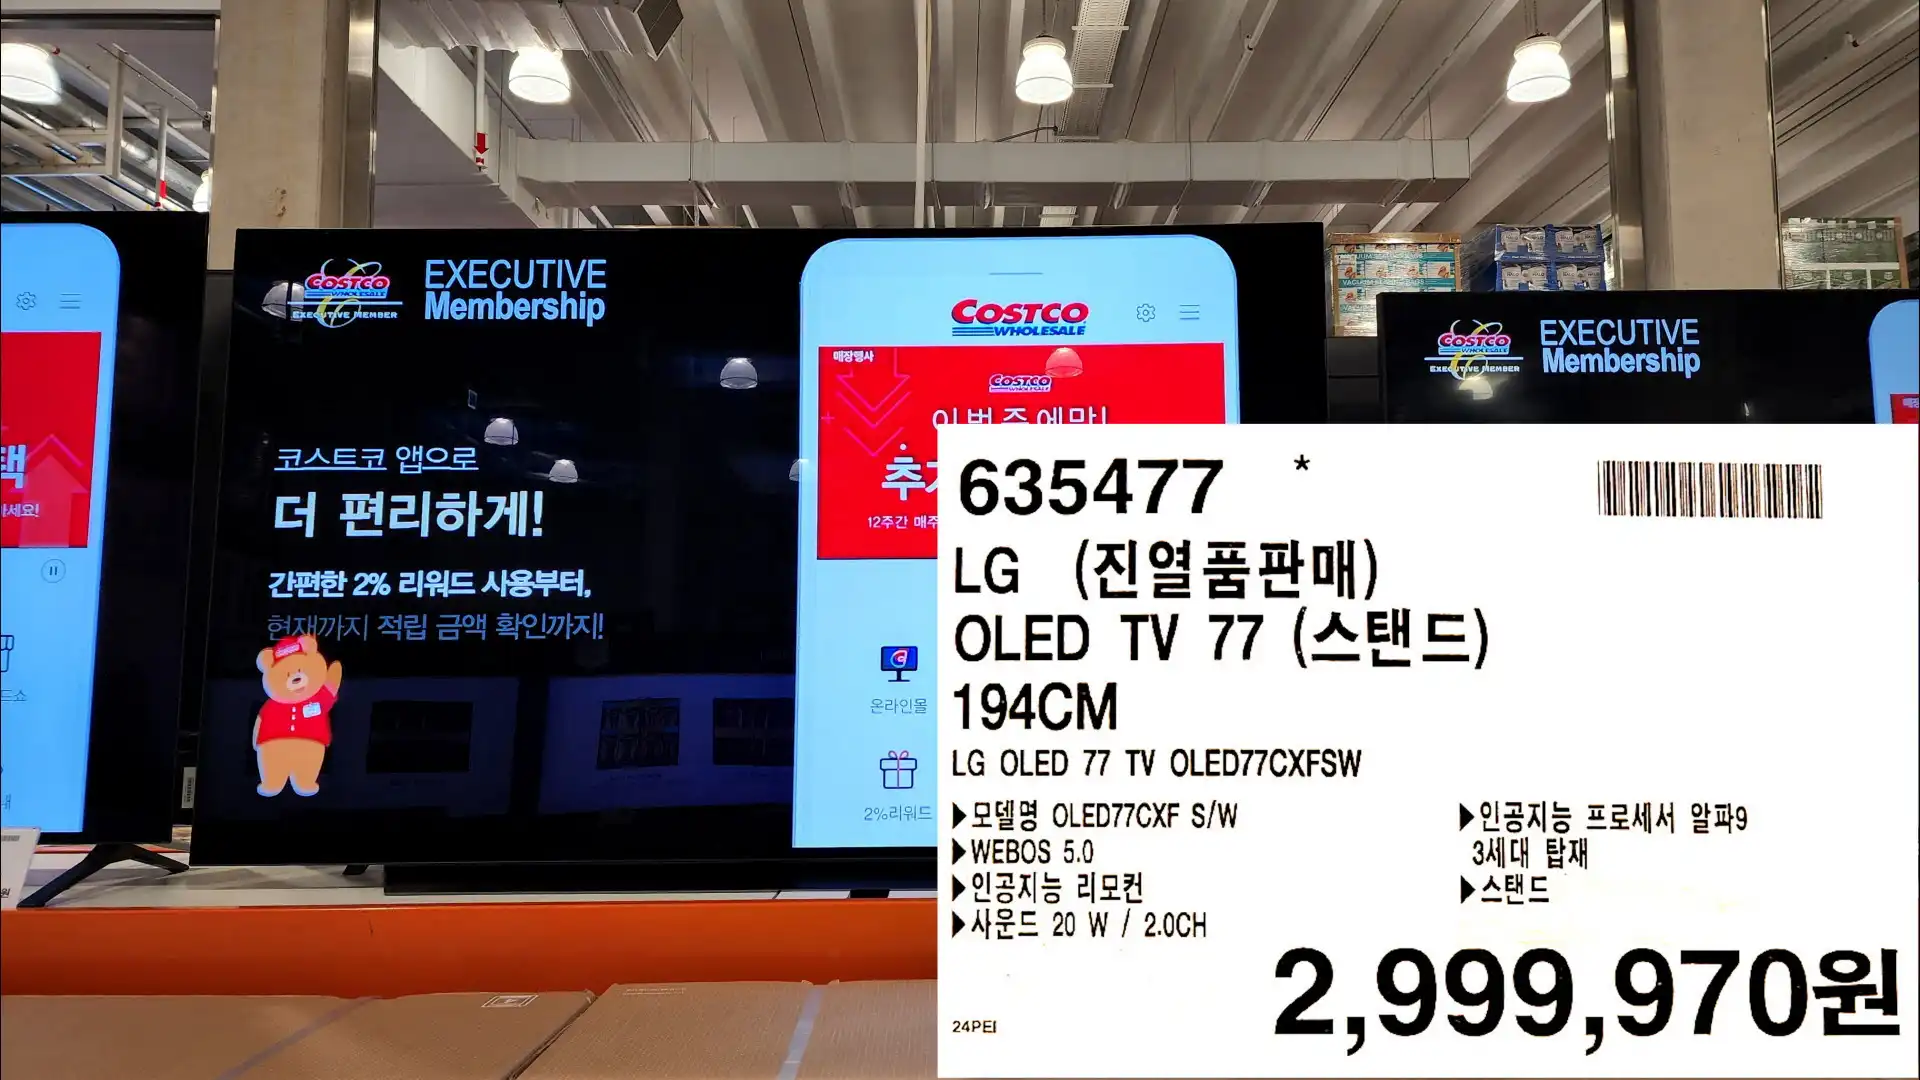 LG (진열품판매)
OLED TV 77 (스탠드)
194CM
LG OLED 77 TV OLED77CXFSW
▶ 모델명 OLED77CXF S/W
▶WEBOS 5.0
▶인공지능 리모컨
▶사운드 20 W/ 2.0CH
▶ 인공지능 프로세서 알파9
3세대 탑재
▶스탠드
2&#44;999&#44;970원